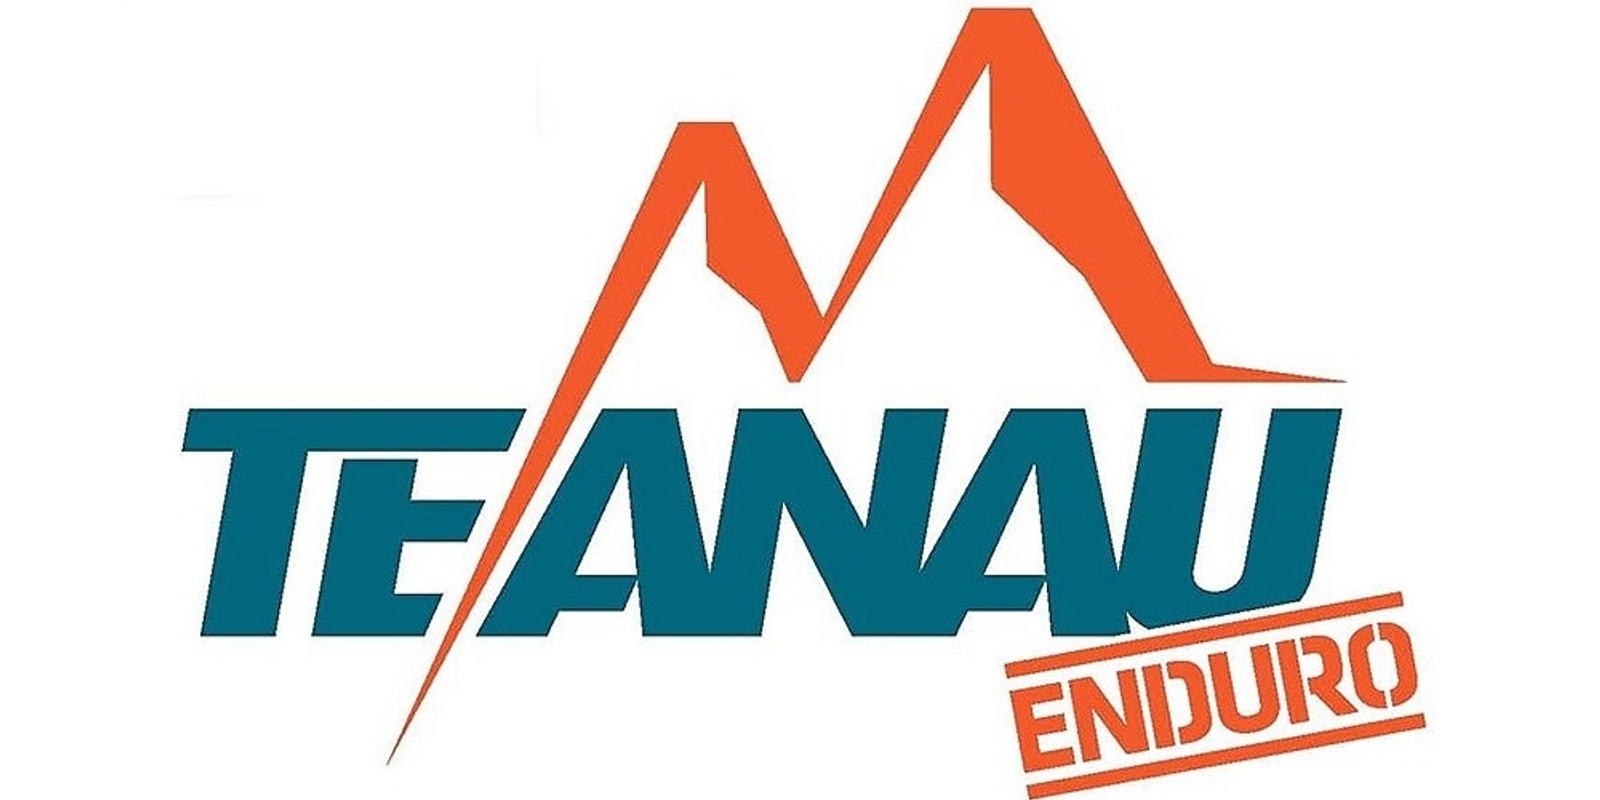 Banner image for Te Anau Enduro